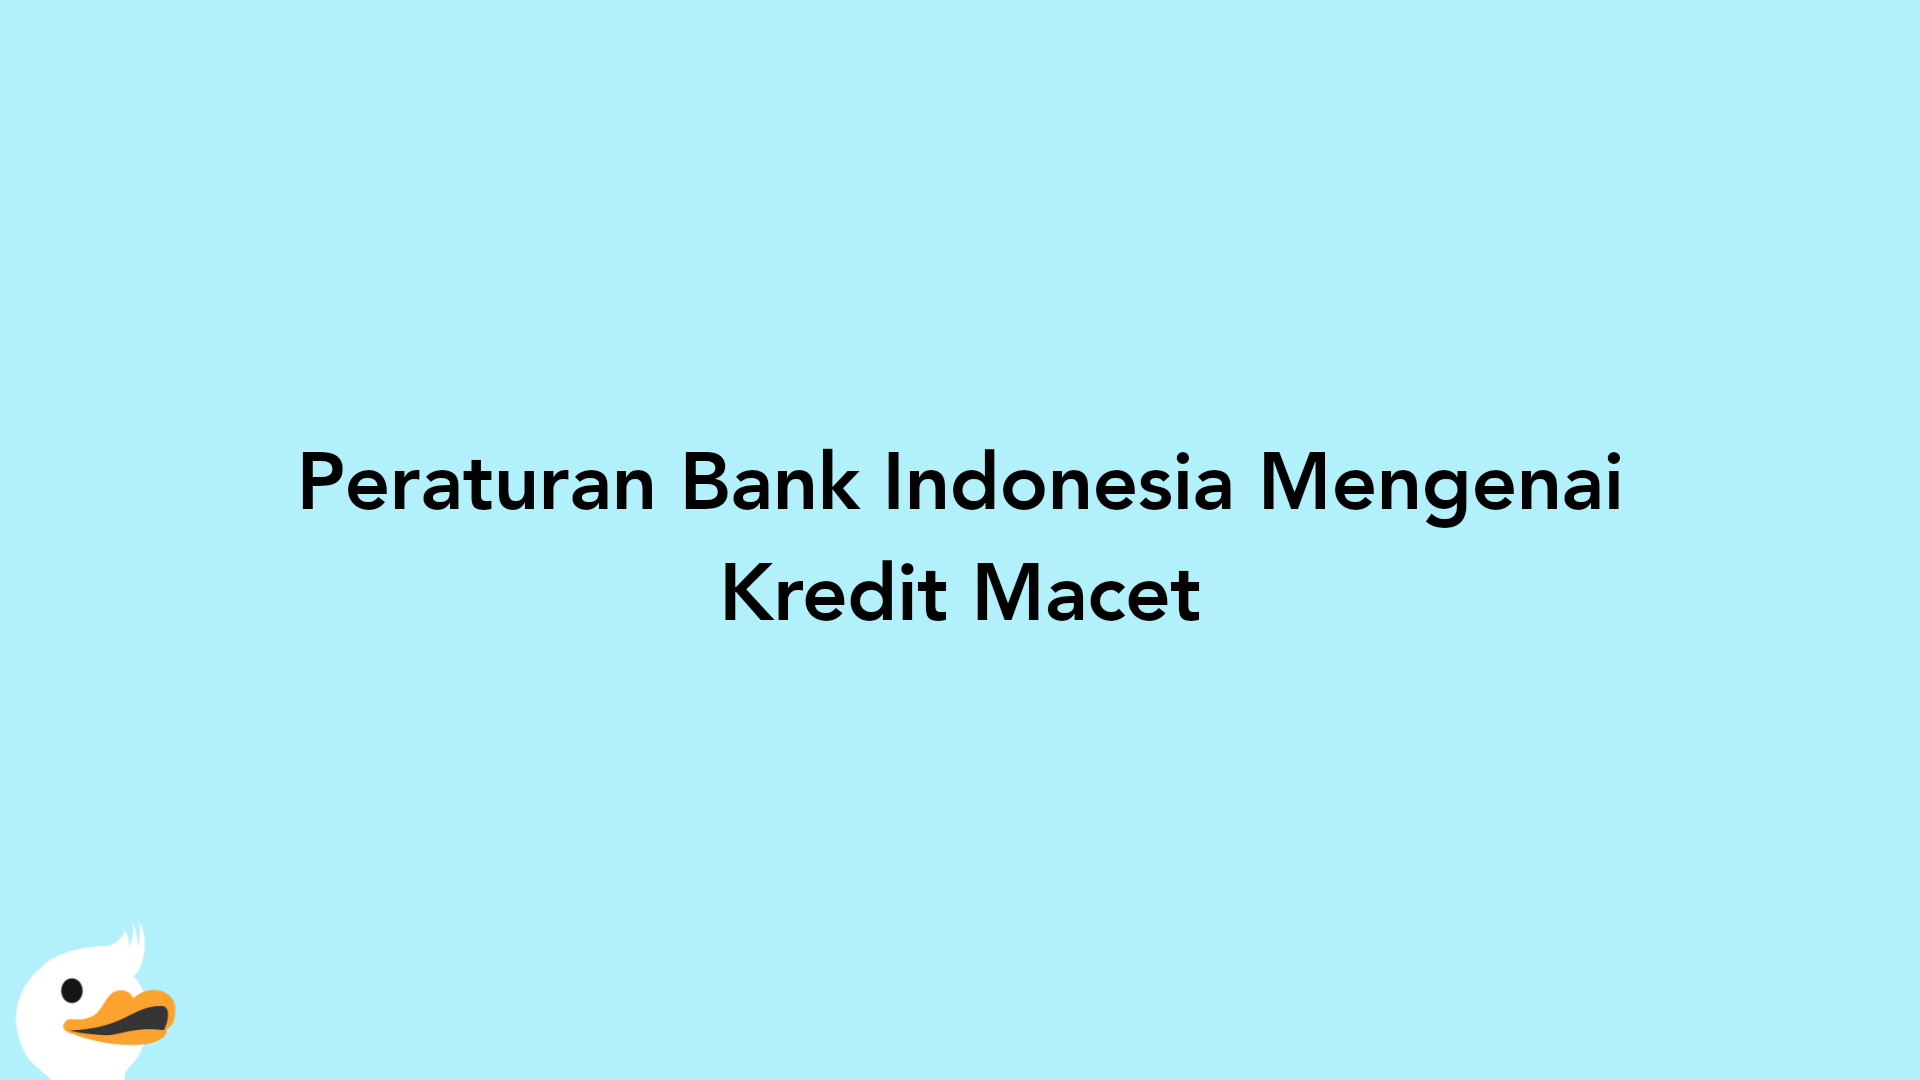 Peraturan Bank Indonesia Mengenai Kredit Macet